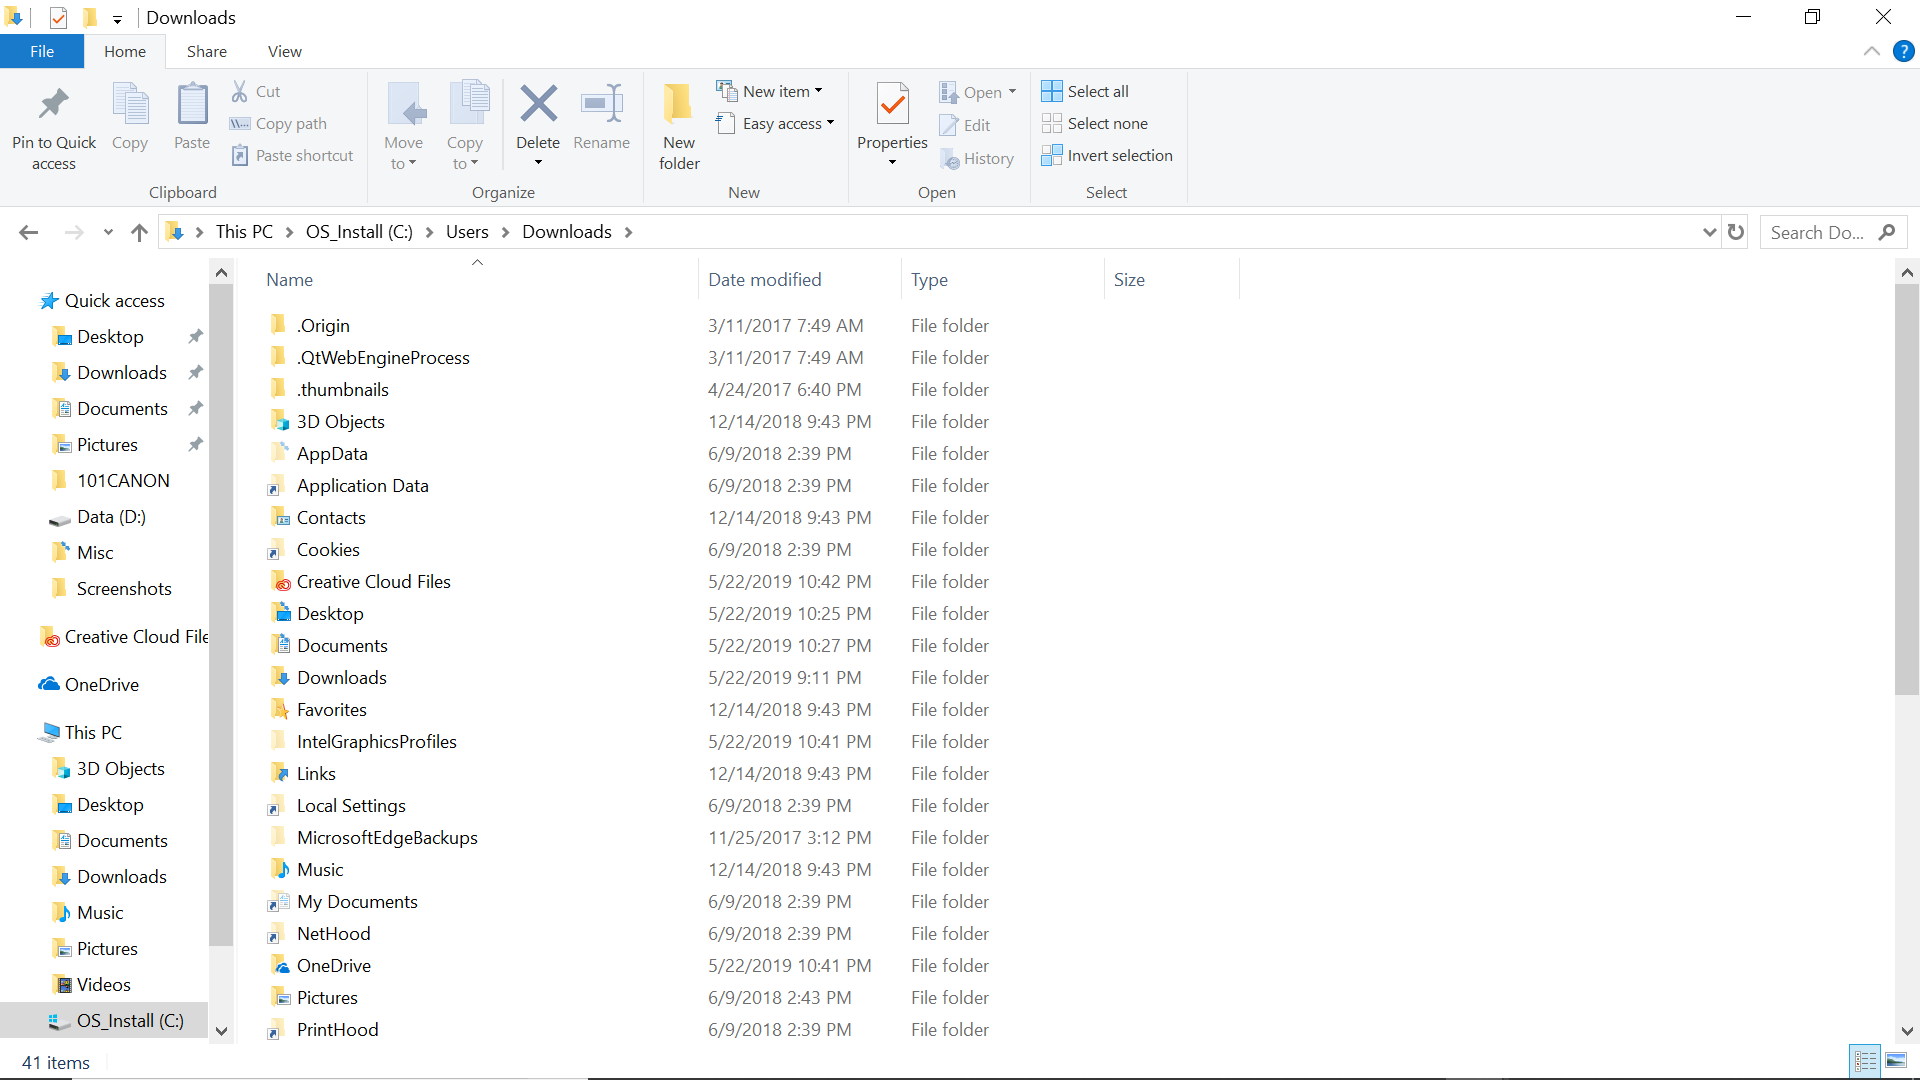 Accidentally merged download folder with Hard drive folder fce79ec2-7437-4e28-bc05-8e31fd9c9dd2?upload=true.png